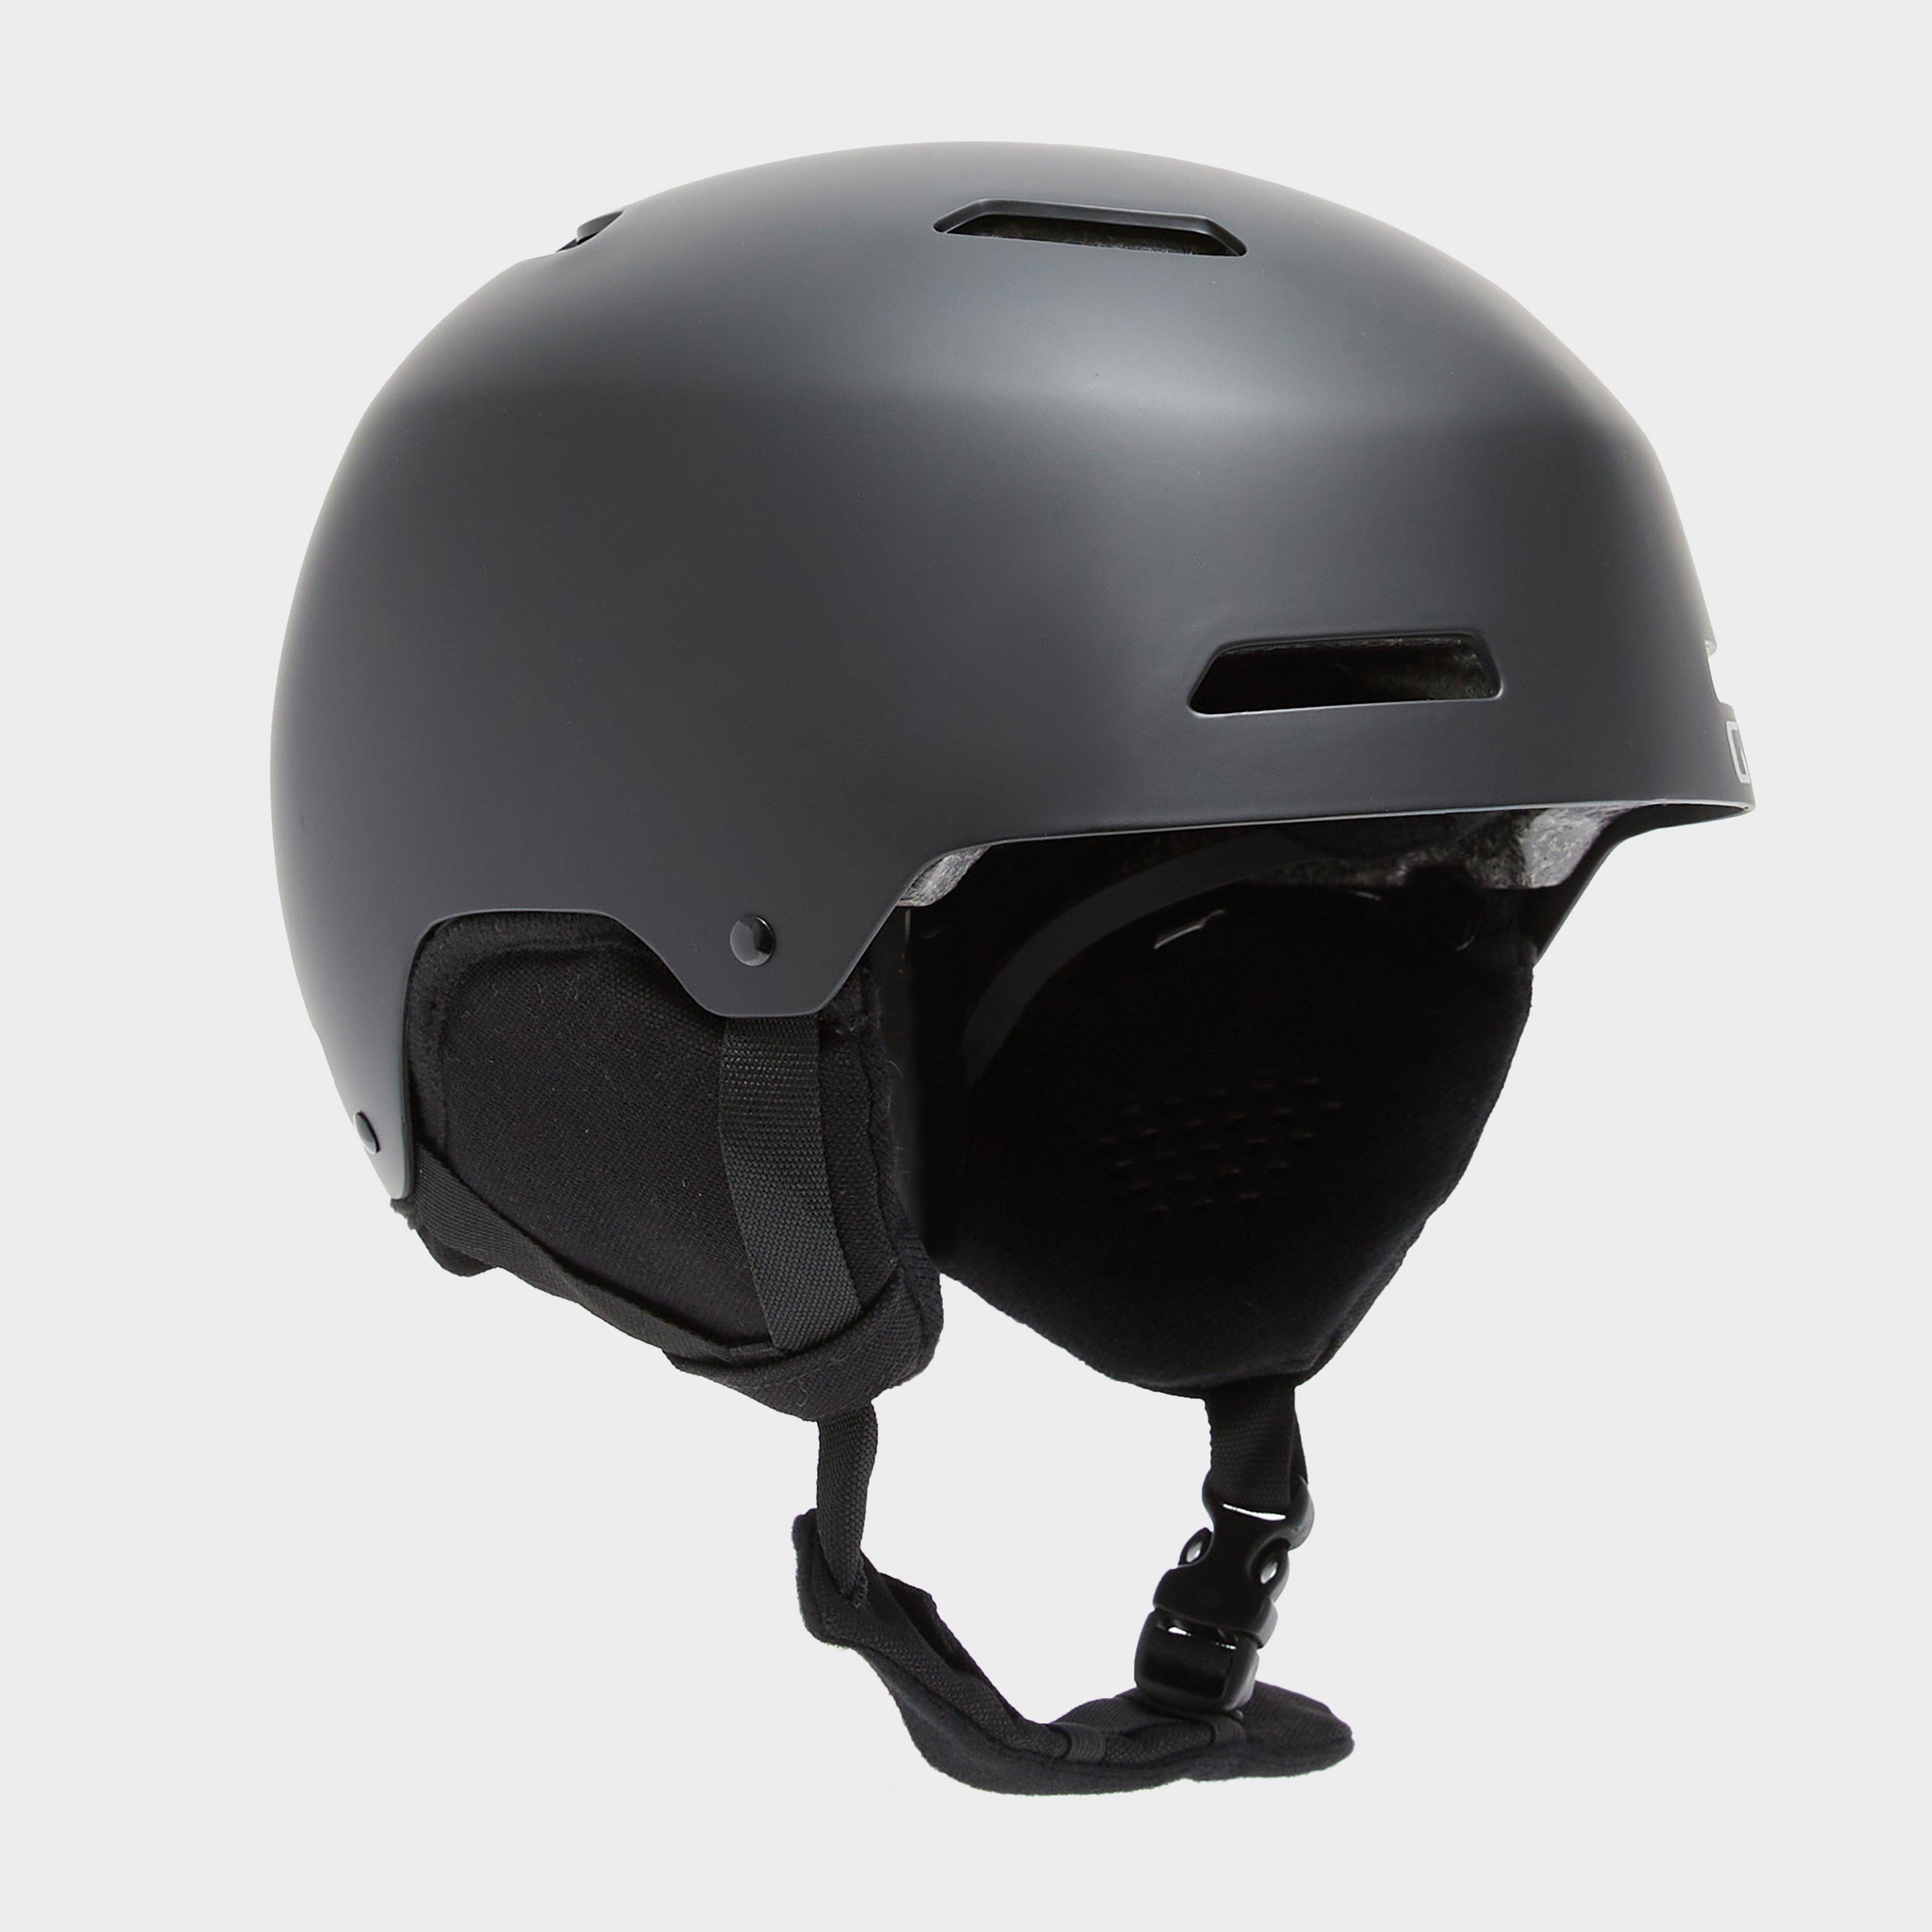  GIRO Ledge MIPS Snow Helmet, Black